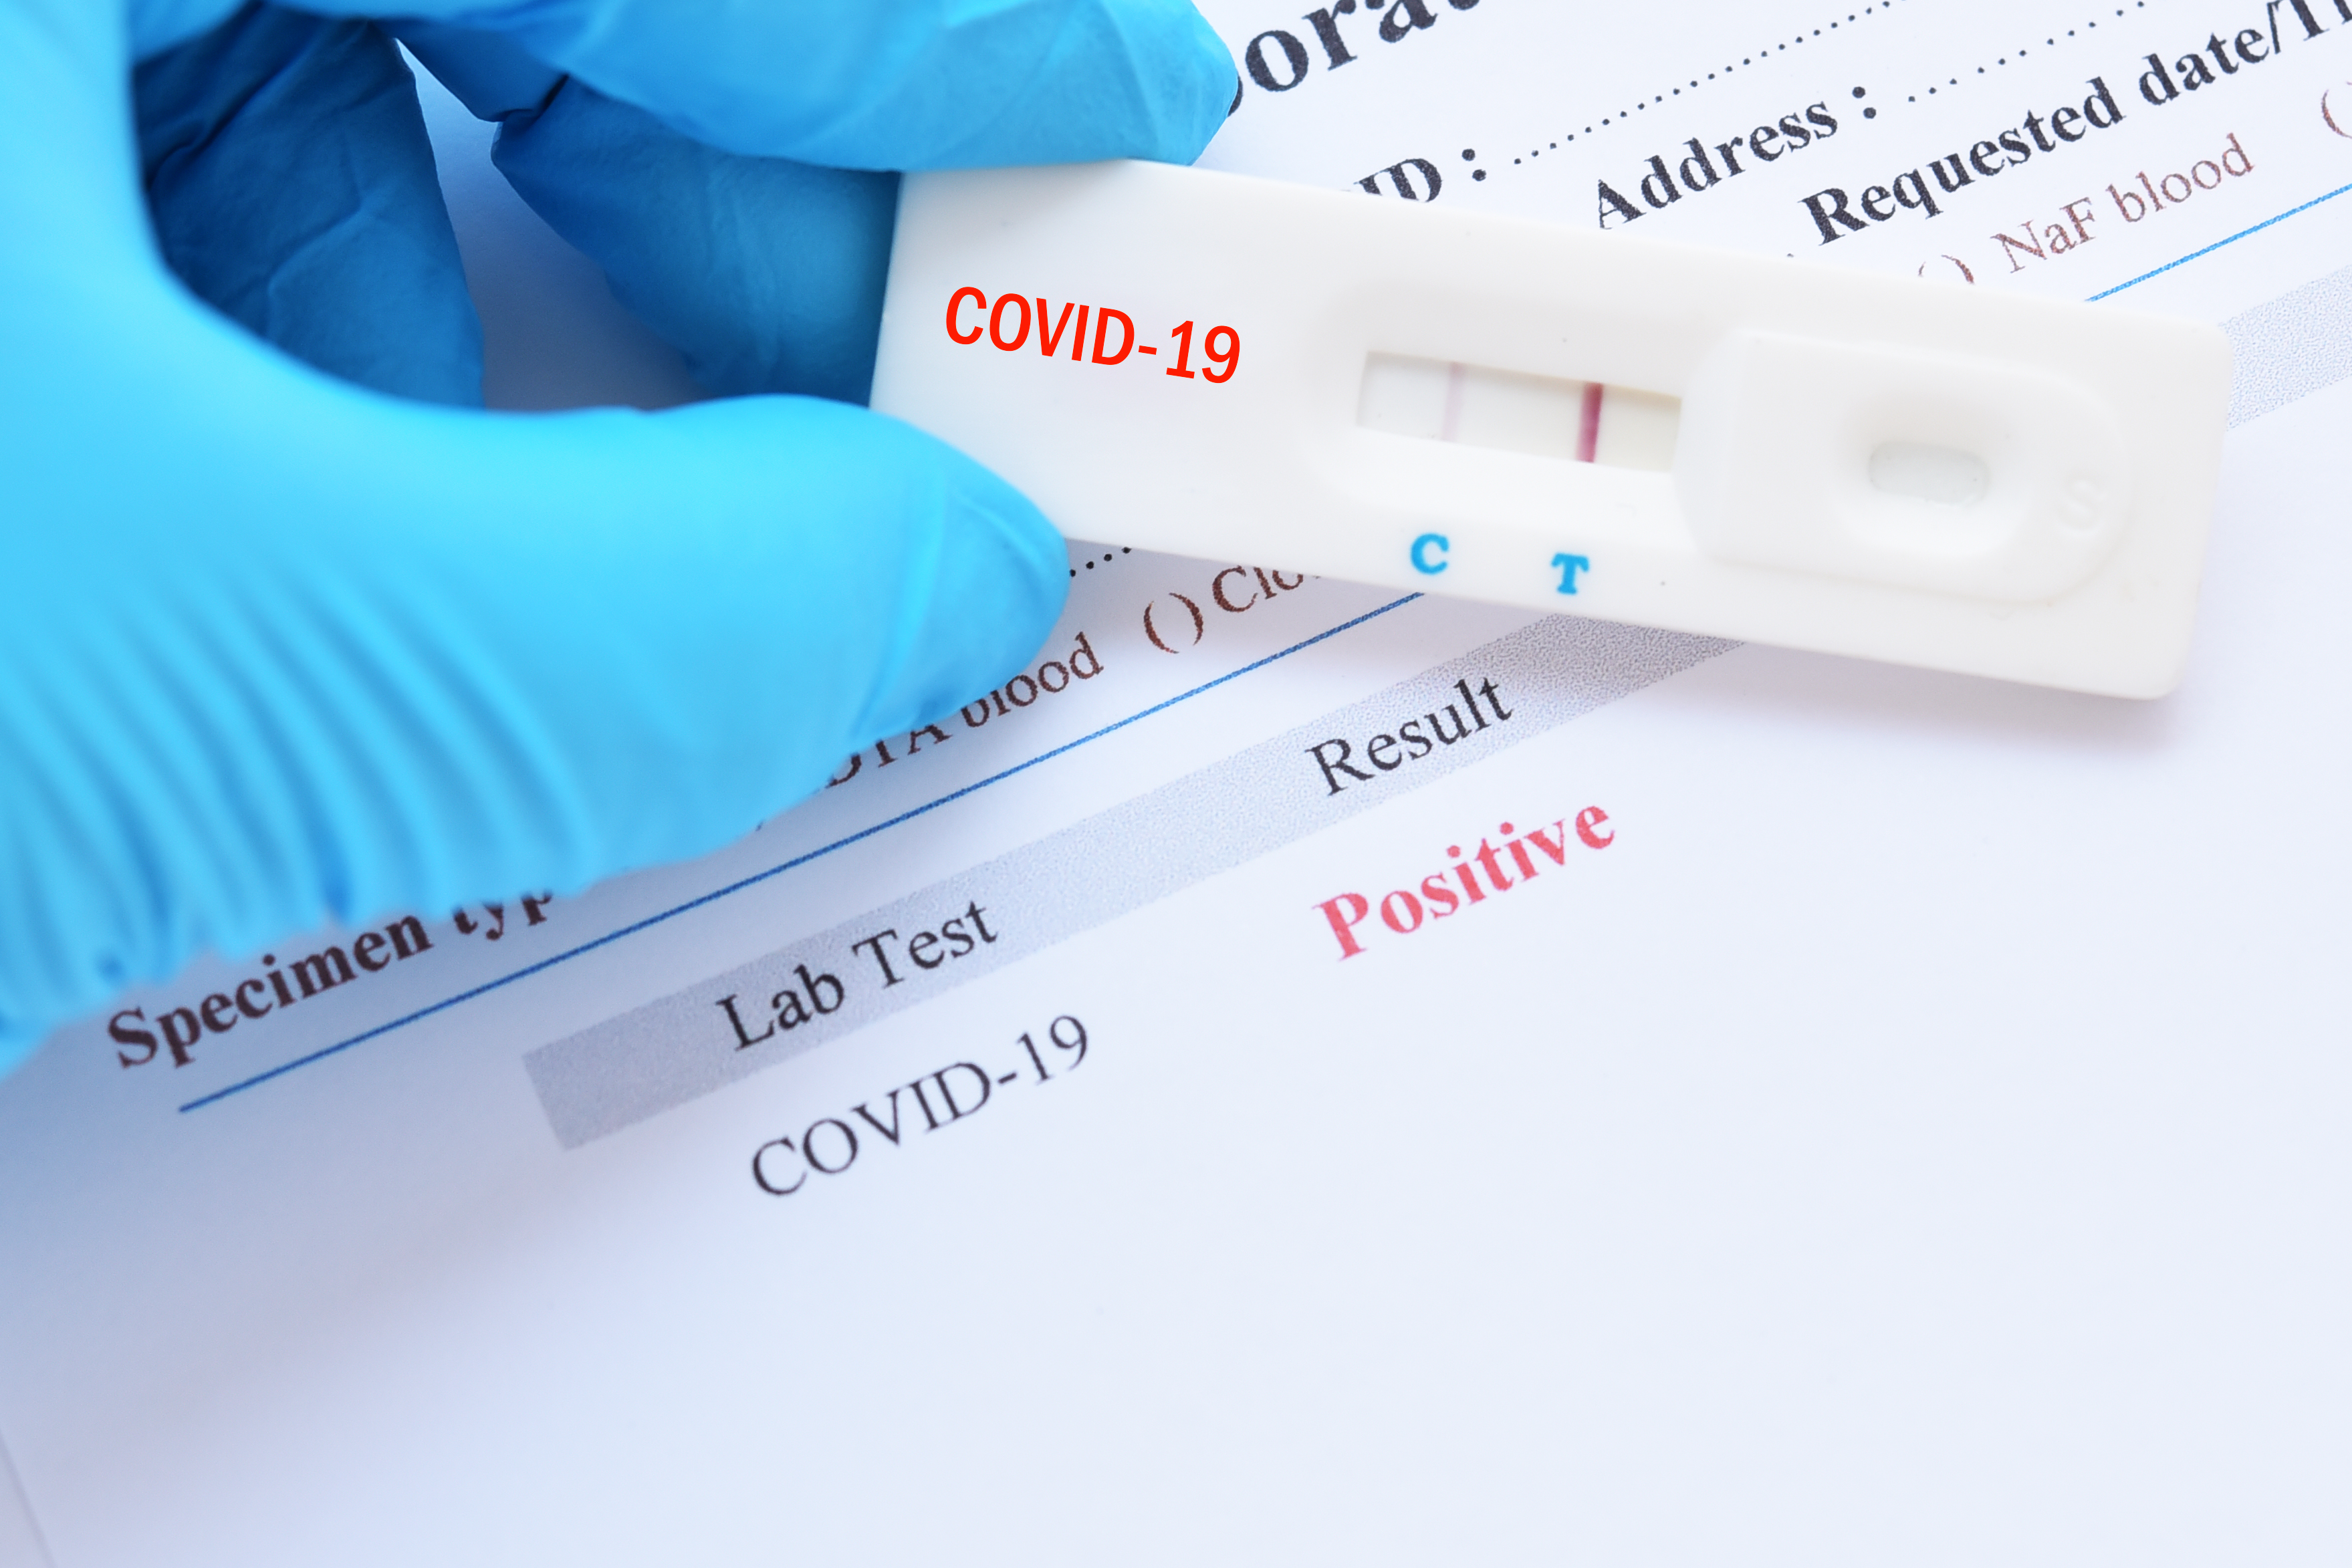 France published draft law for COVID-19 serological tests